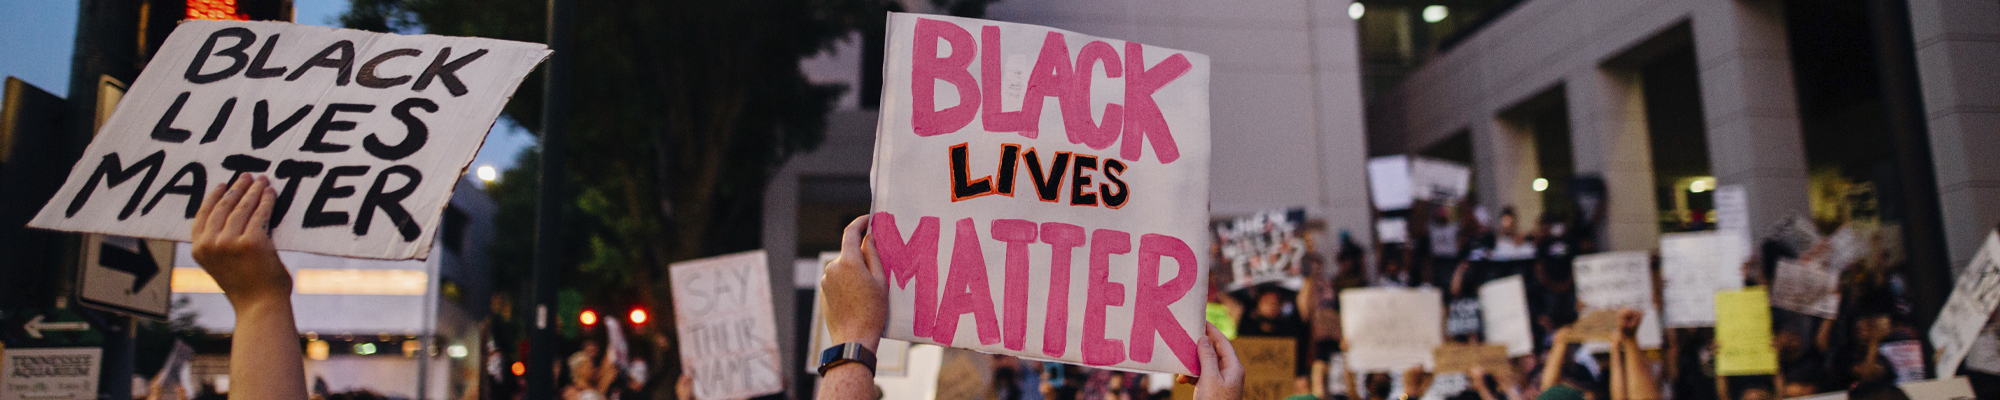 Black Loves Matter Protest